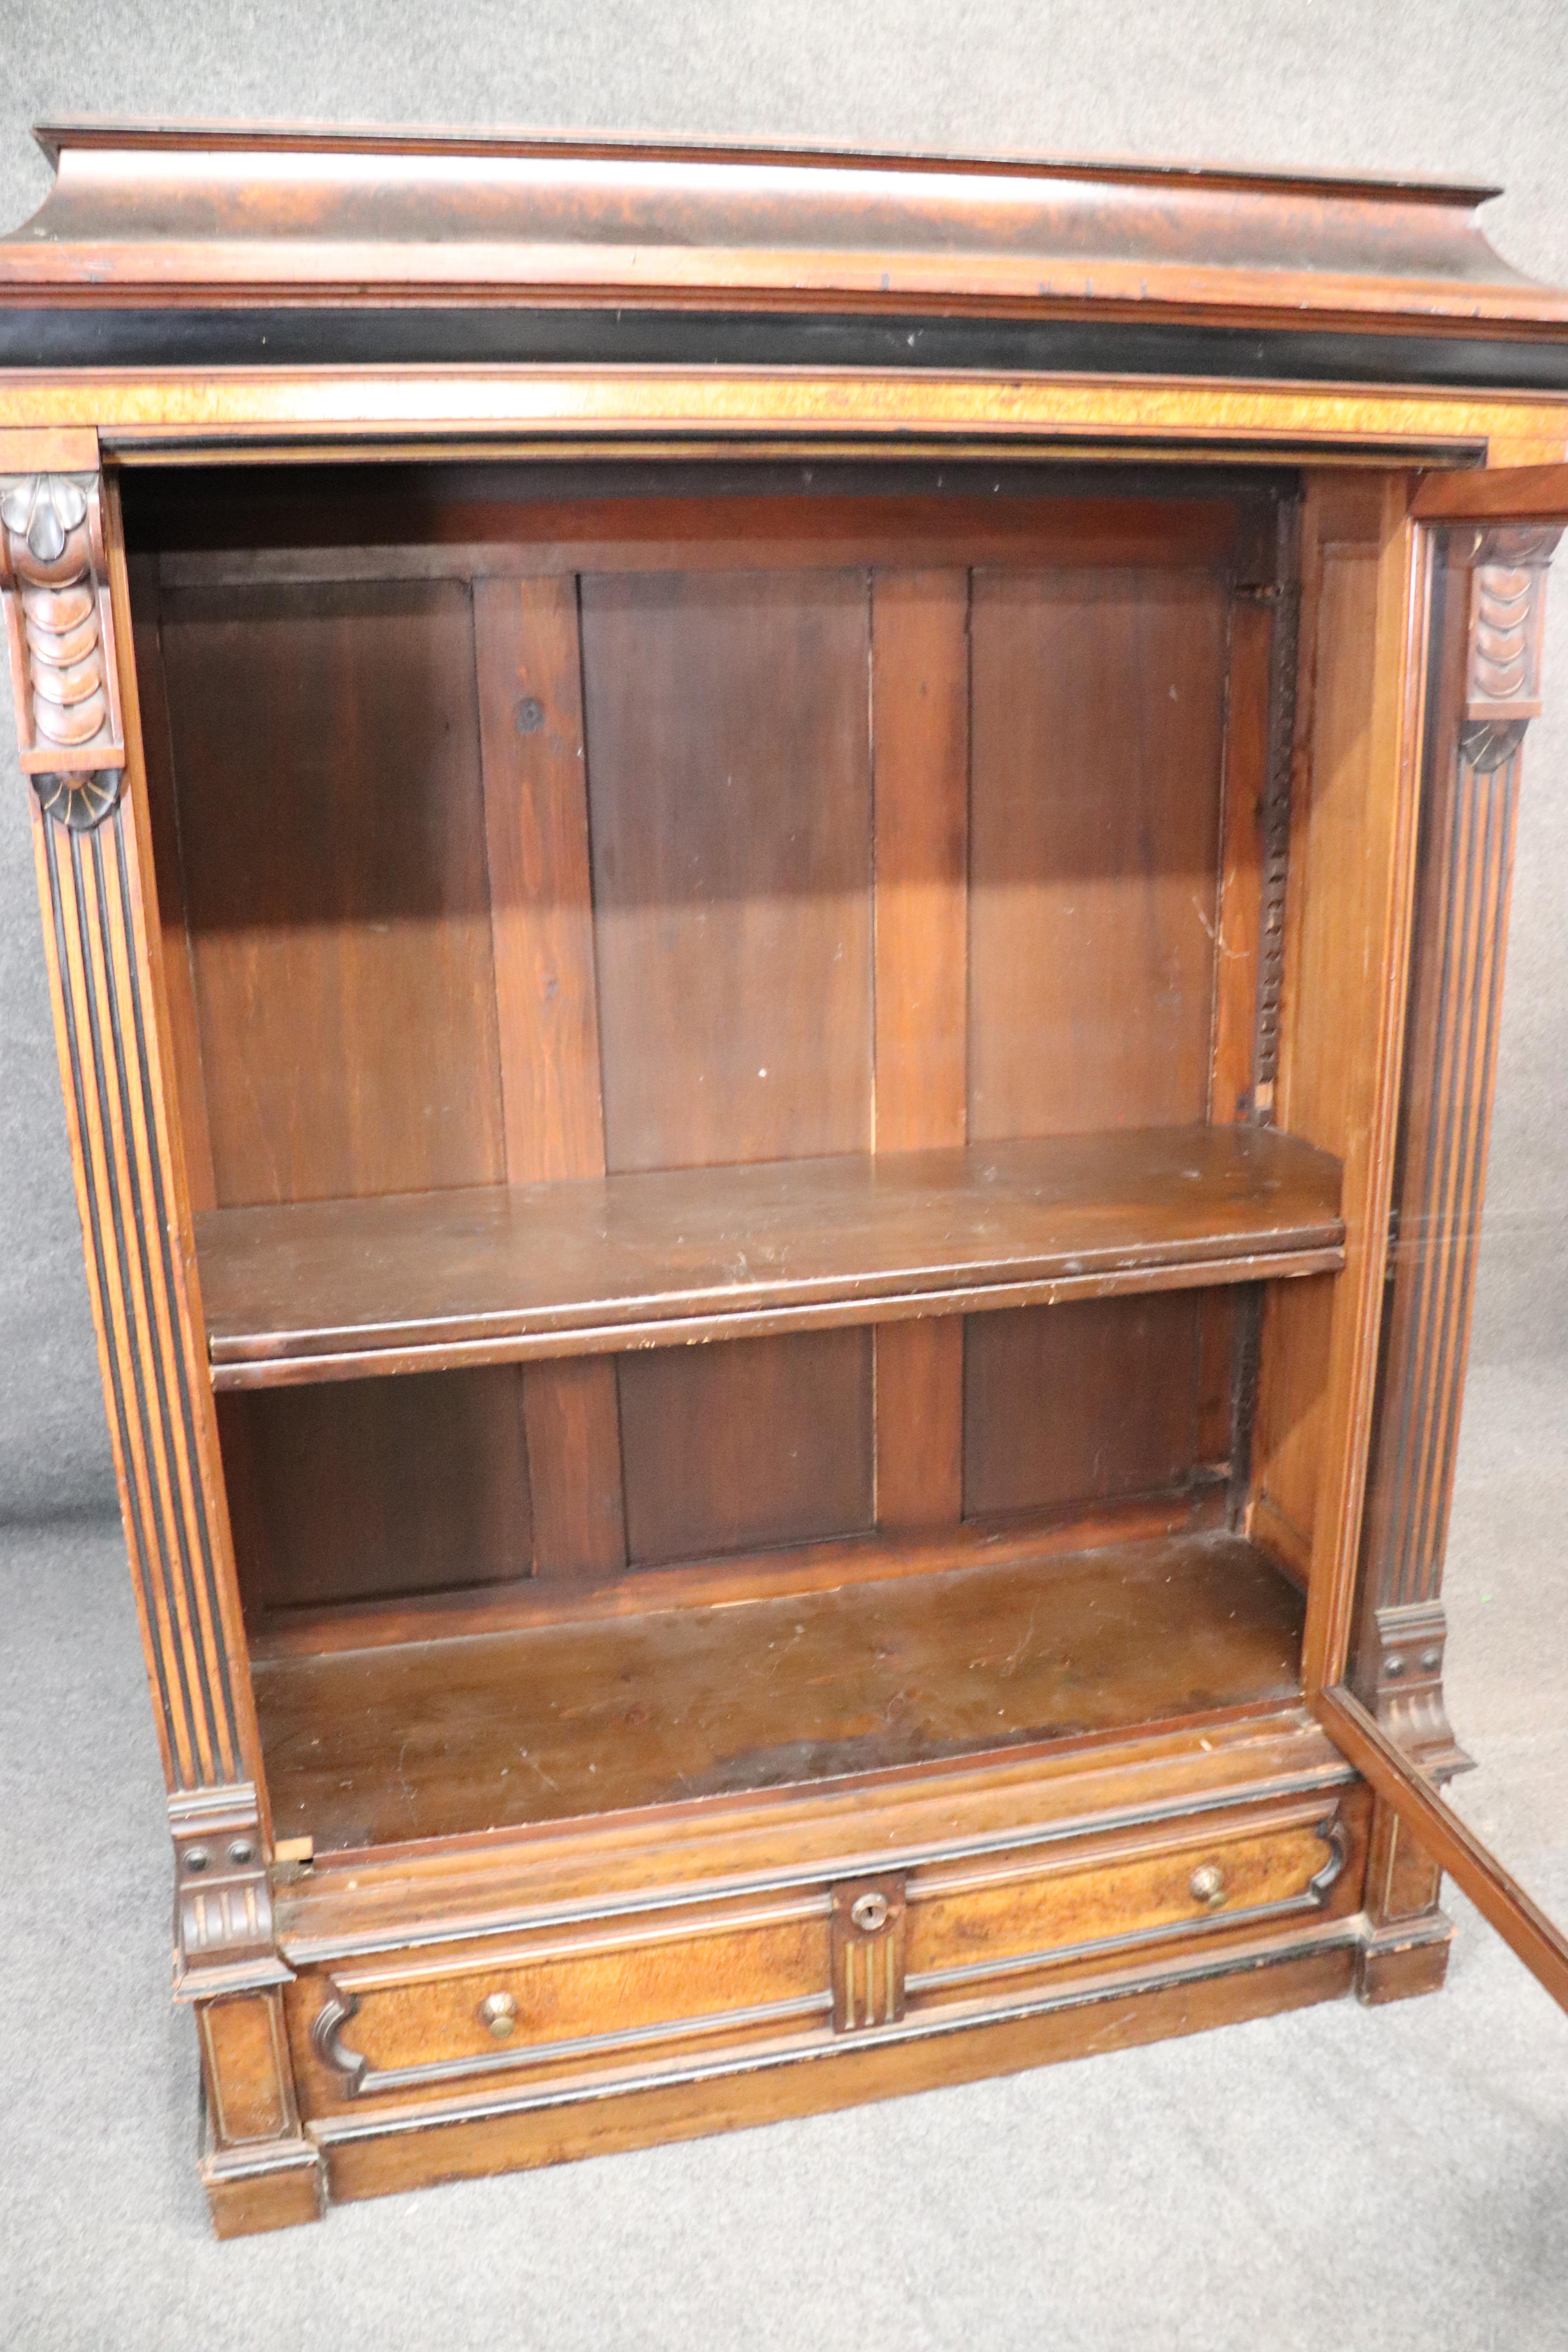 Rare American Victorian Renaissance Revival Burled Walnut Vitrine Bookcase C1870 8